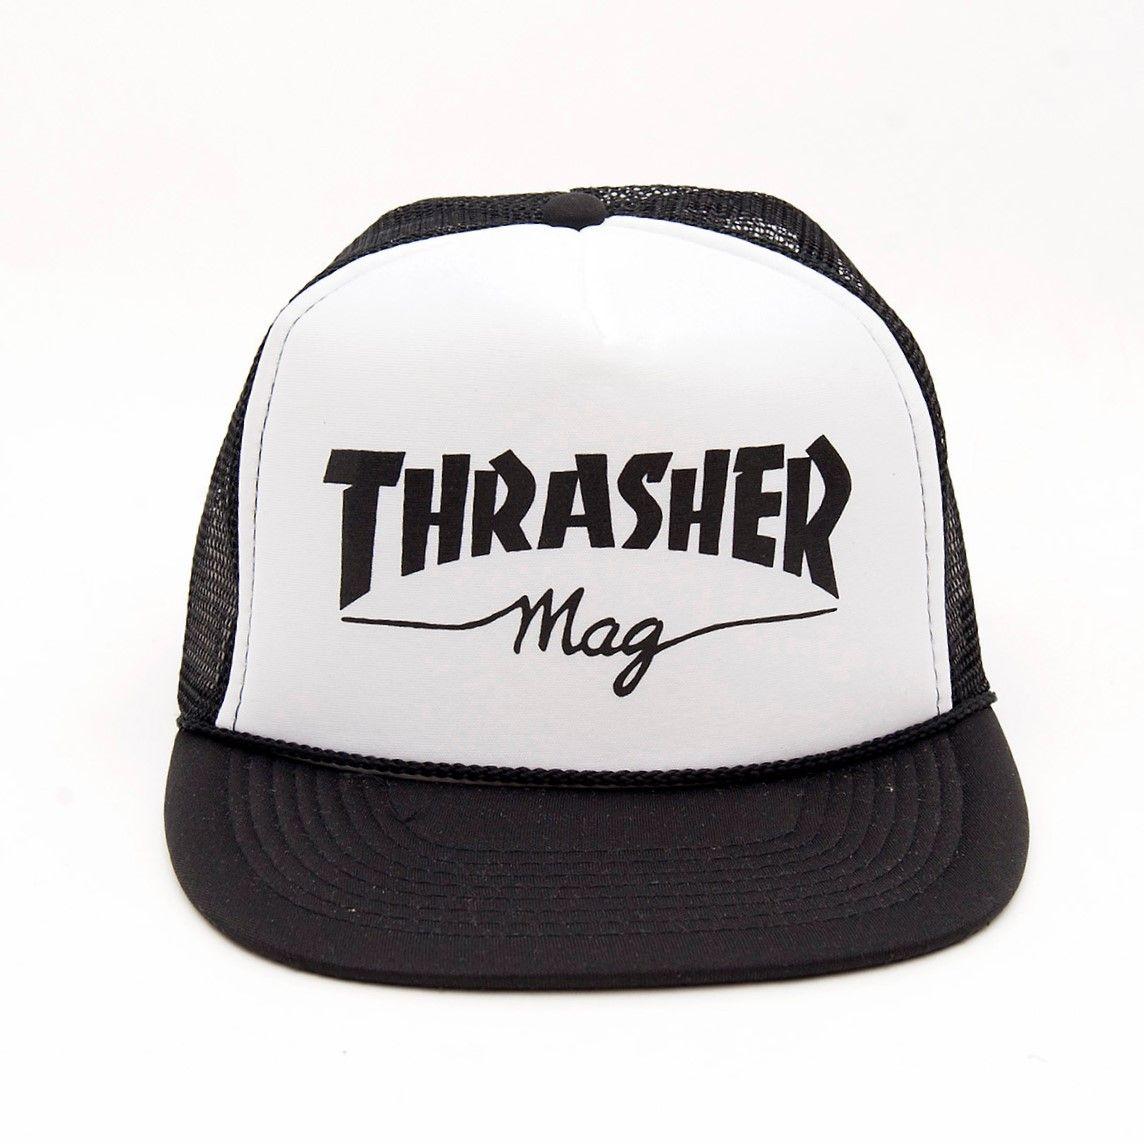 Thrasher Mag Logo - THRASHER MAG LOGO PRINTED MESH CAP Snapback : Insiders